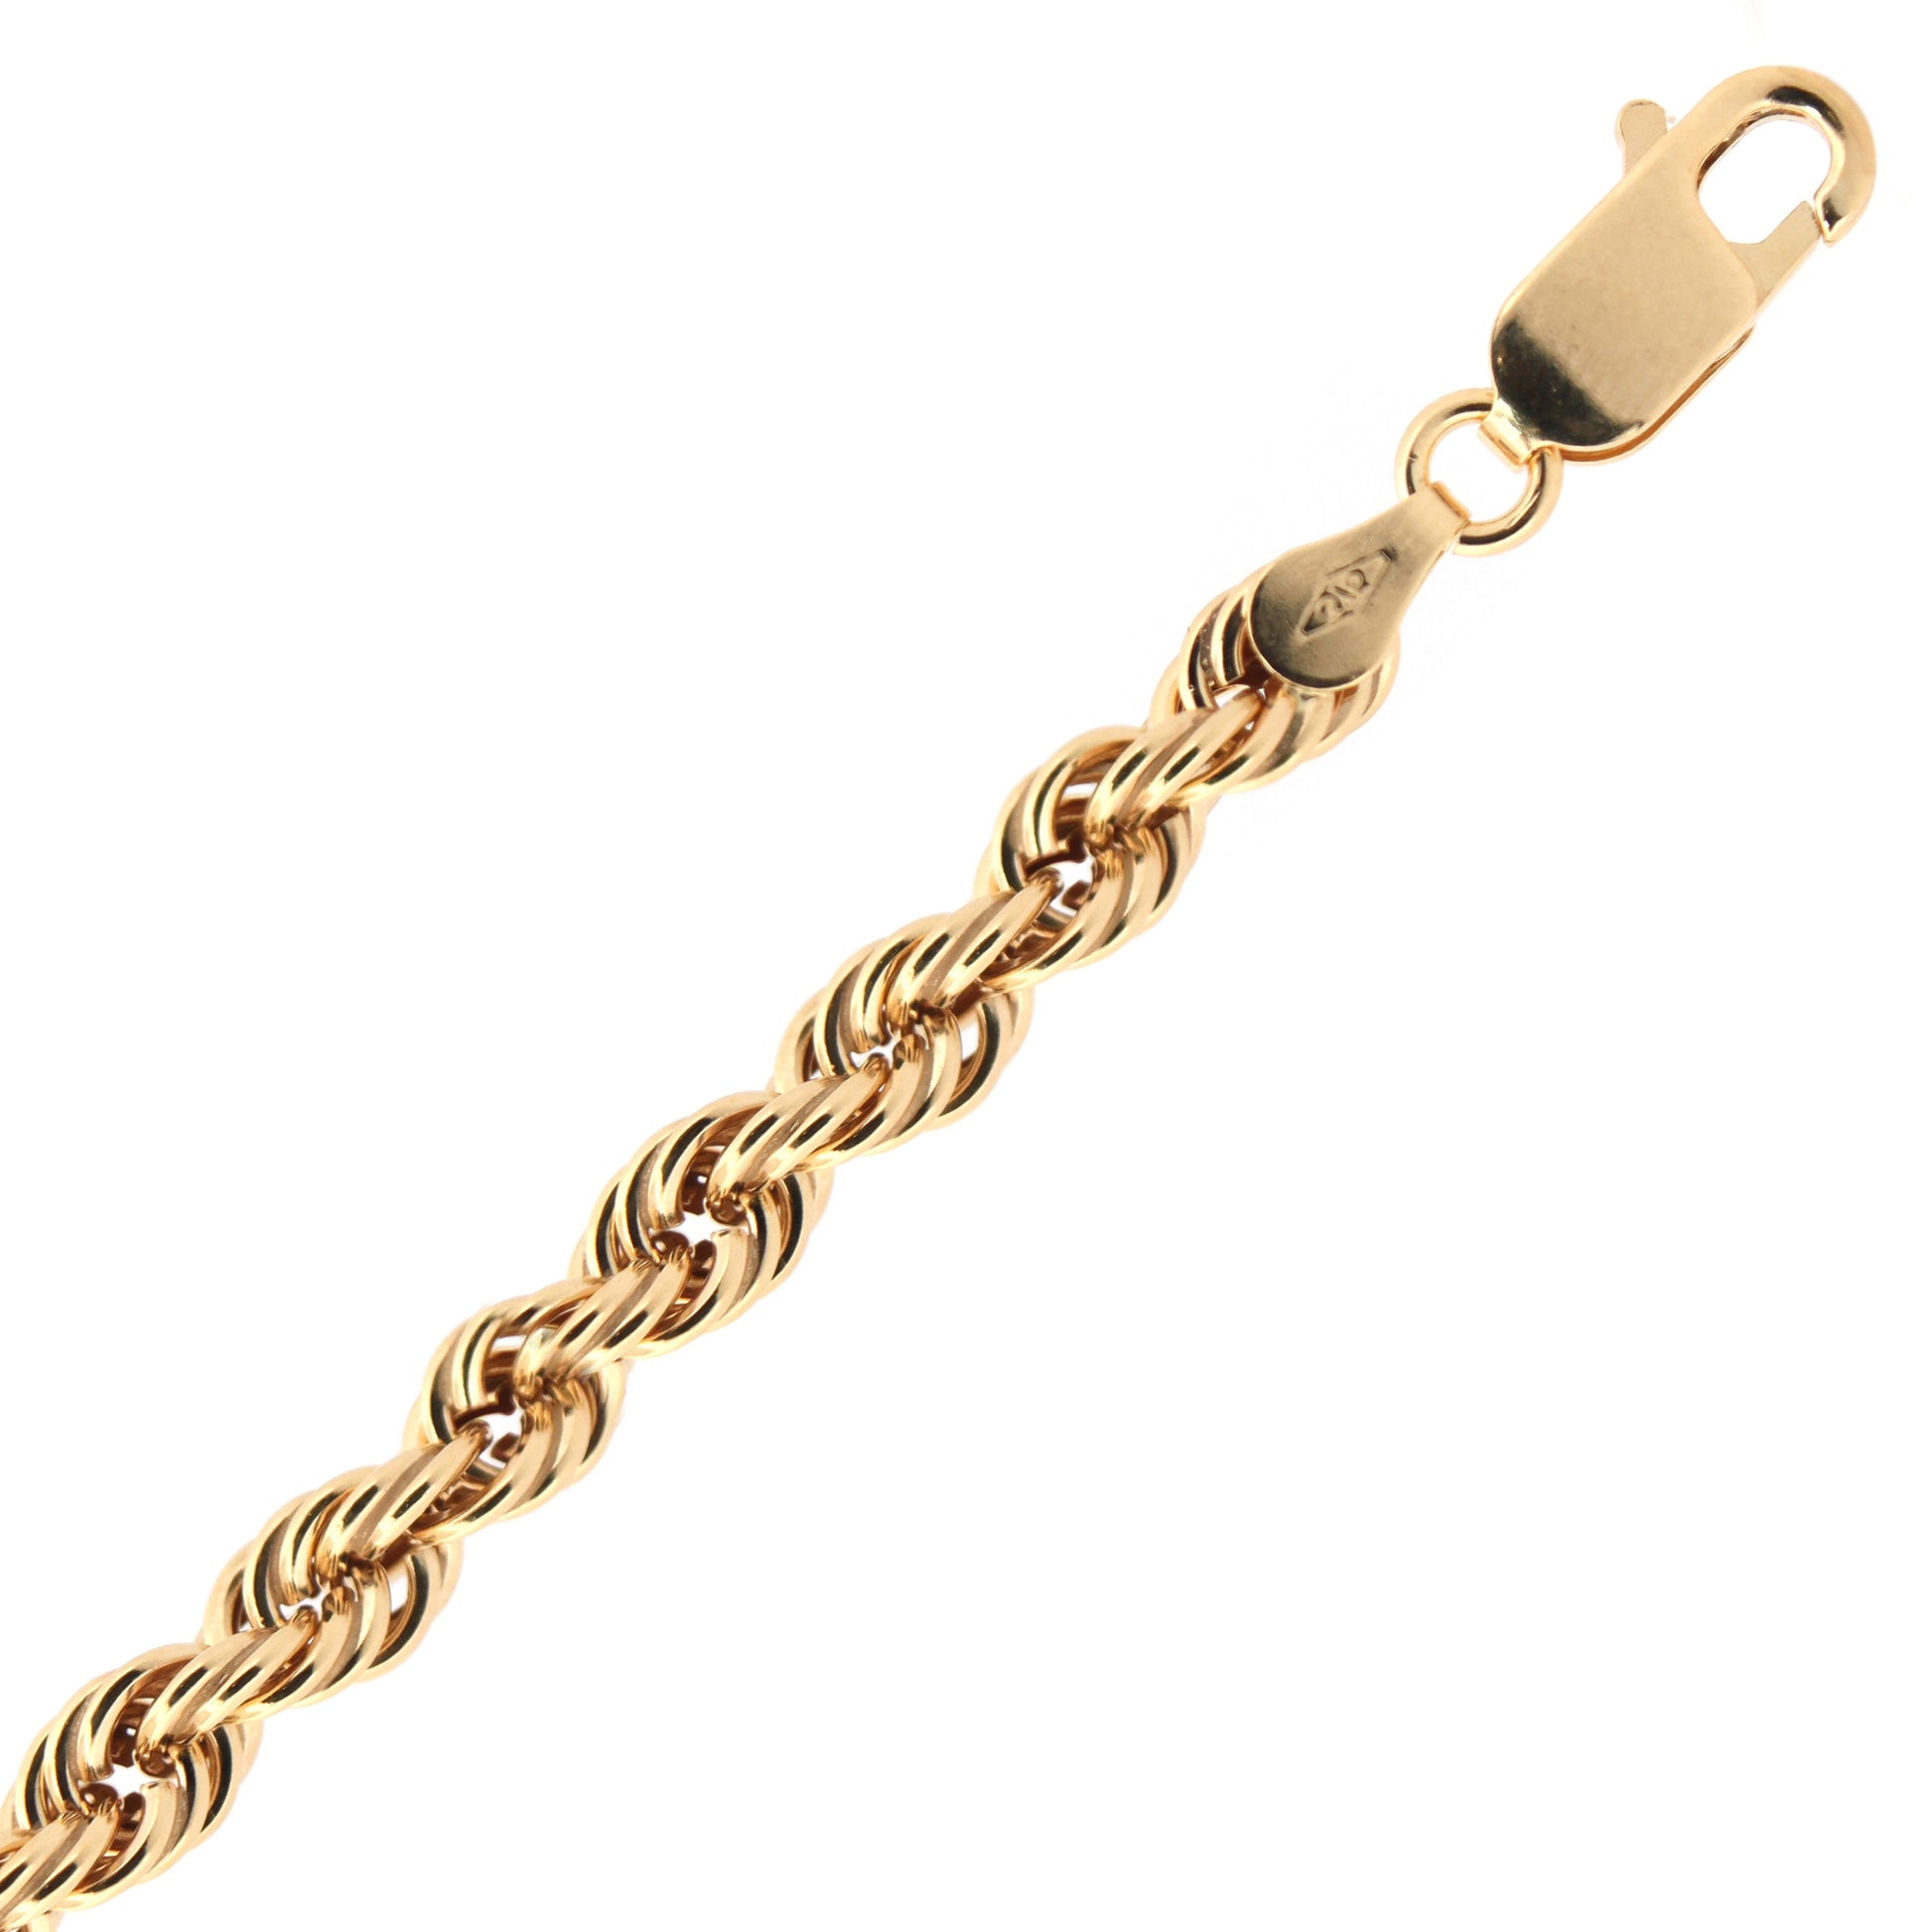 9ct Gold  Diamond Cut Hollow Rope 5mm Chain Bracelet 7.5 inch 19cm - JBB325D